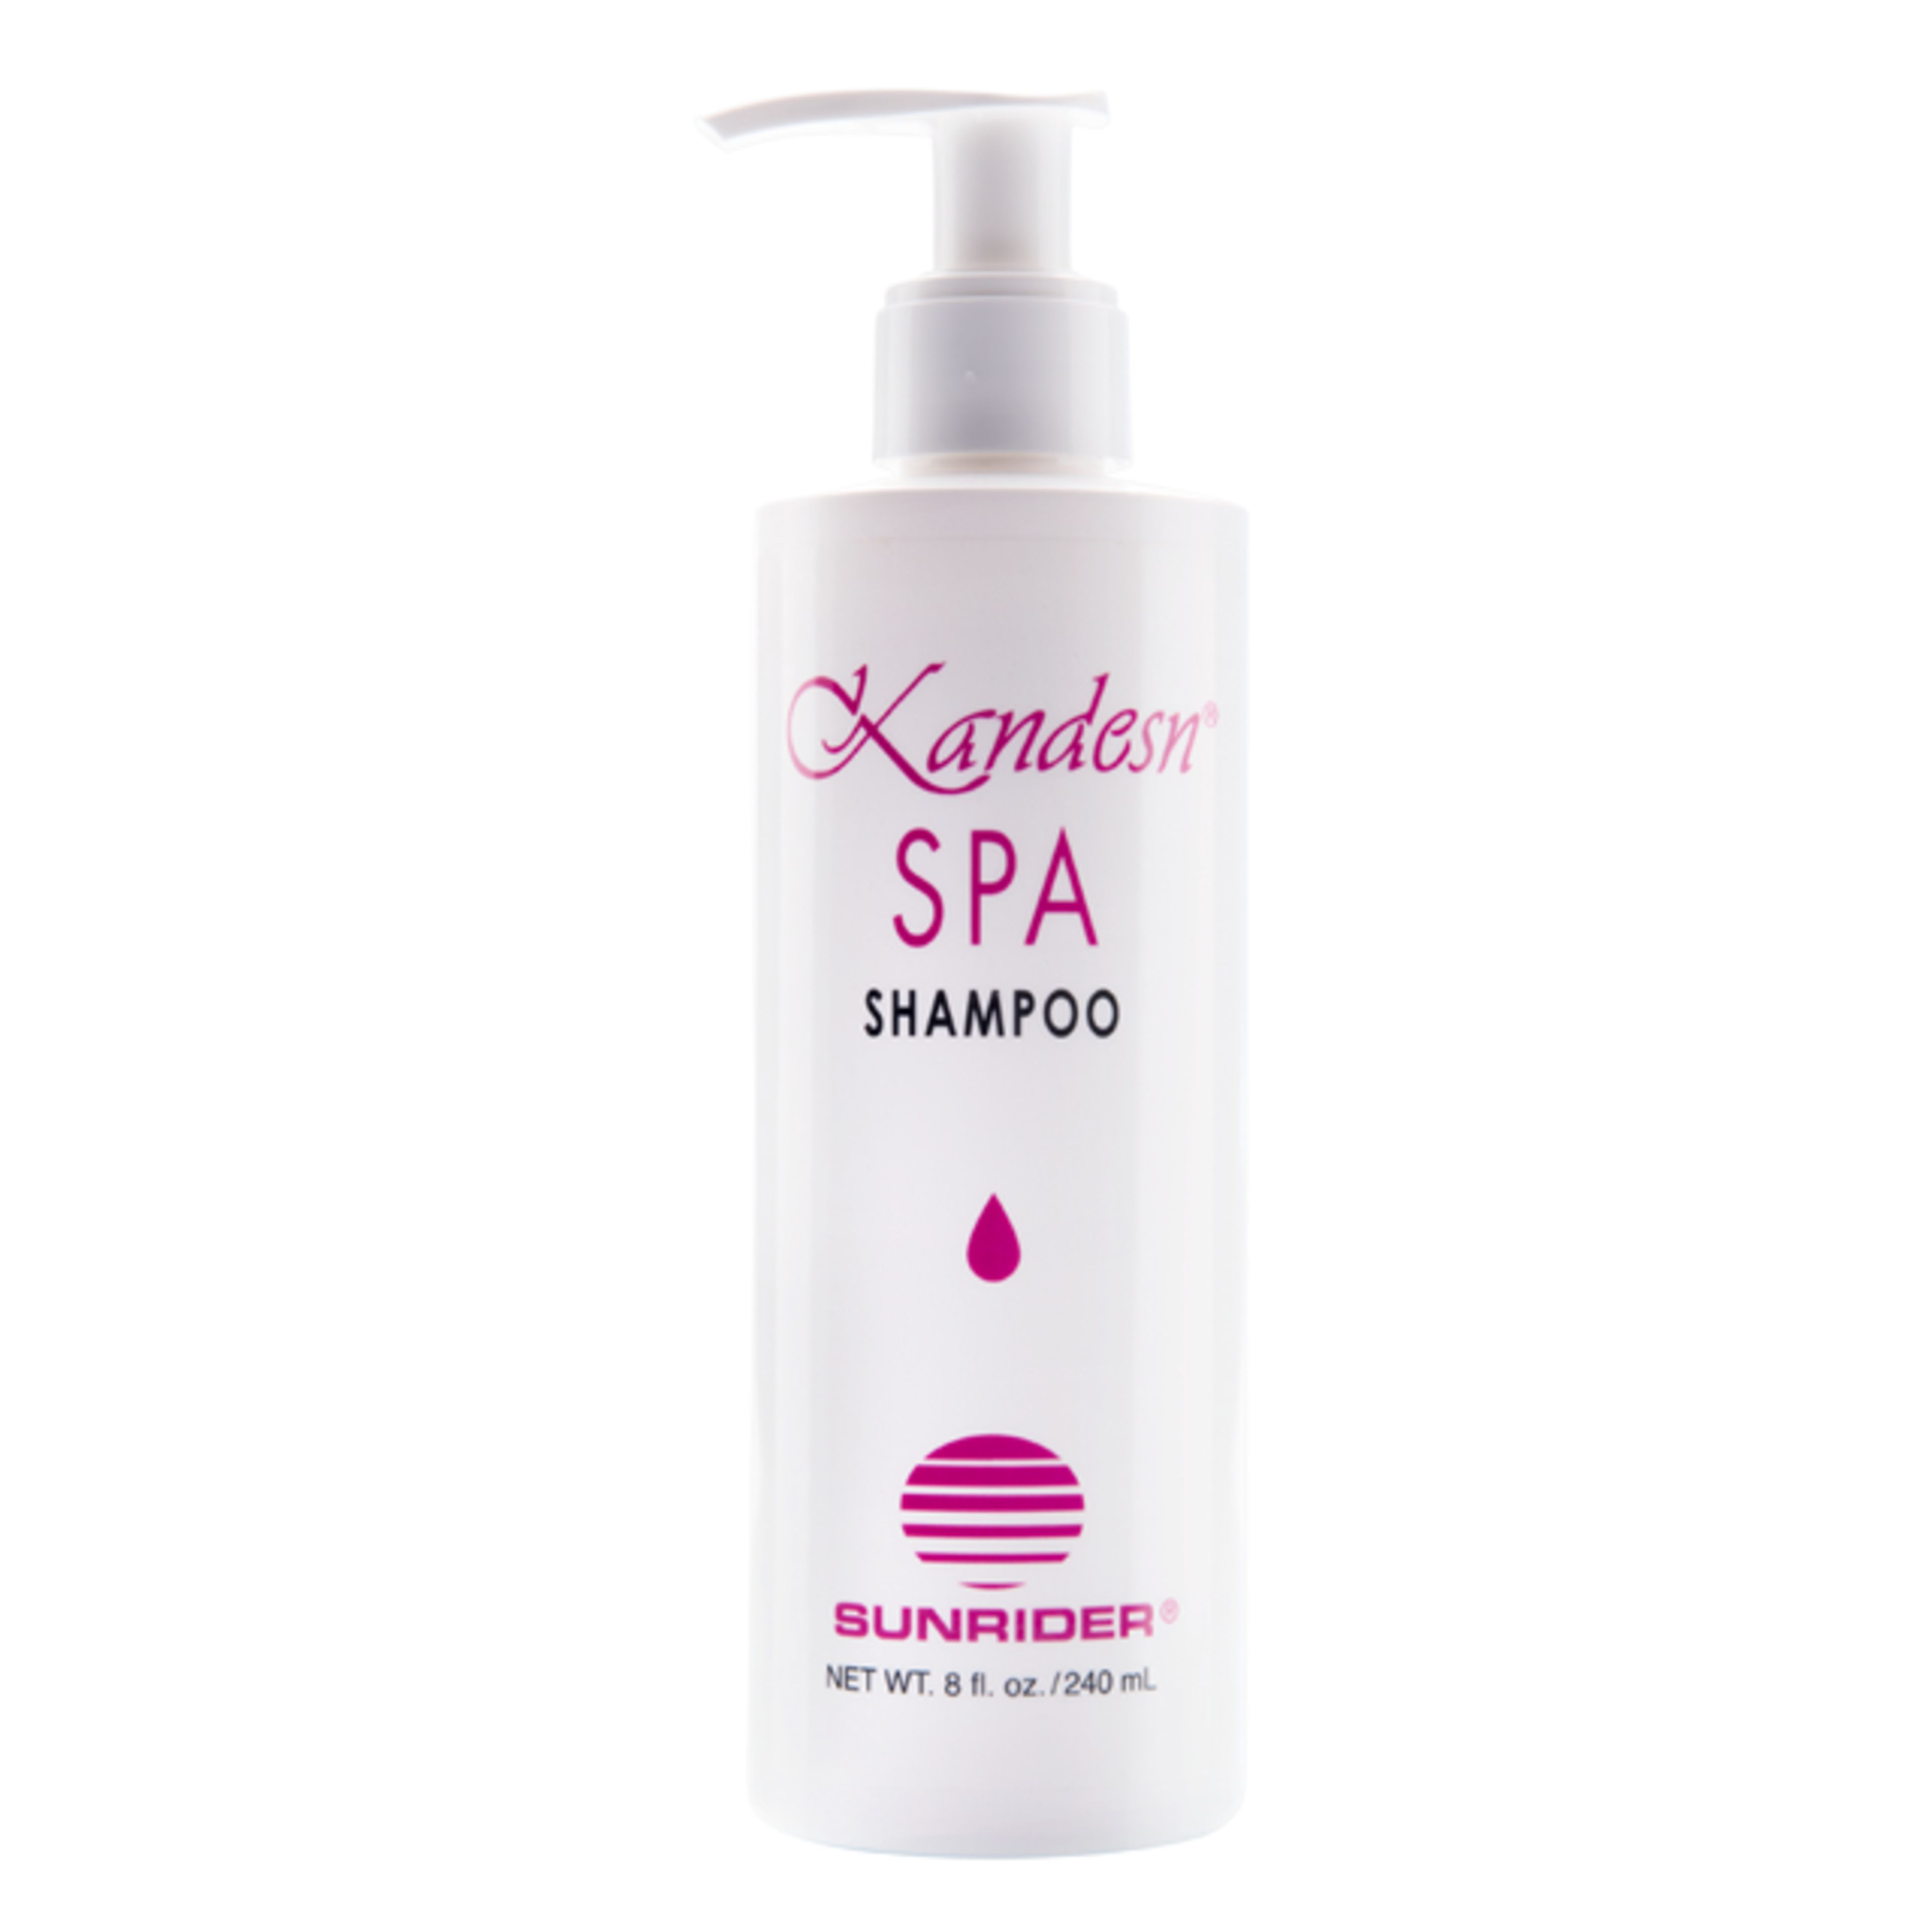 Kandesn® Spa Shampoo 8 fl. oz. 